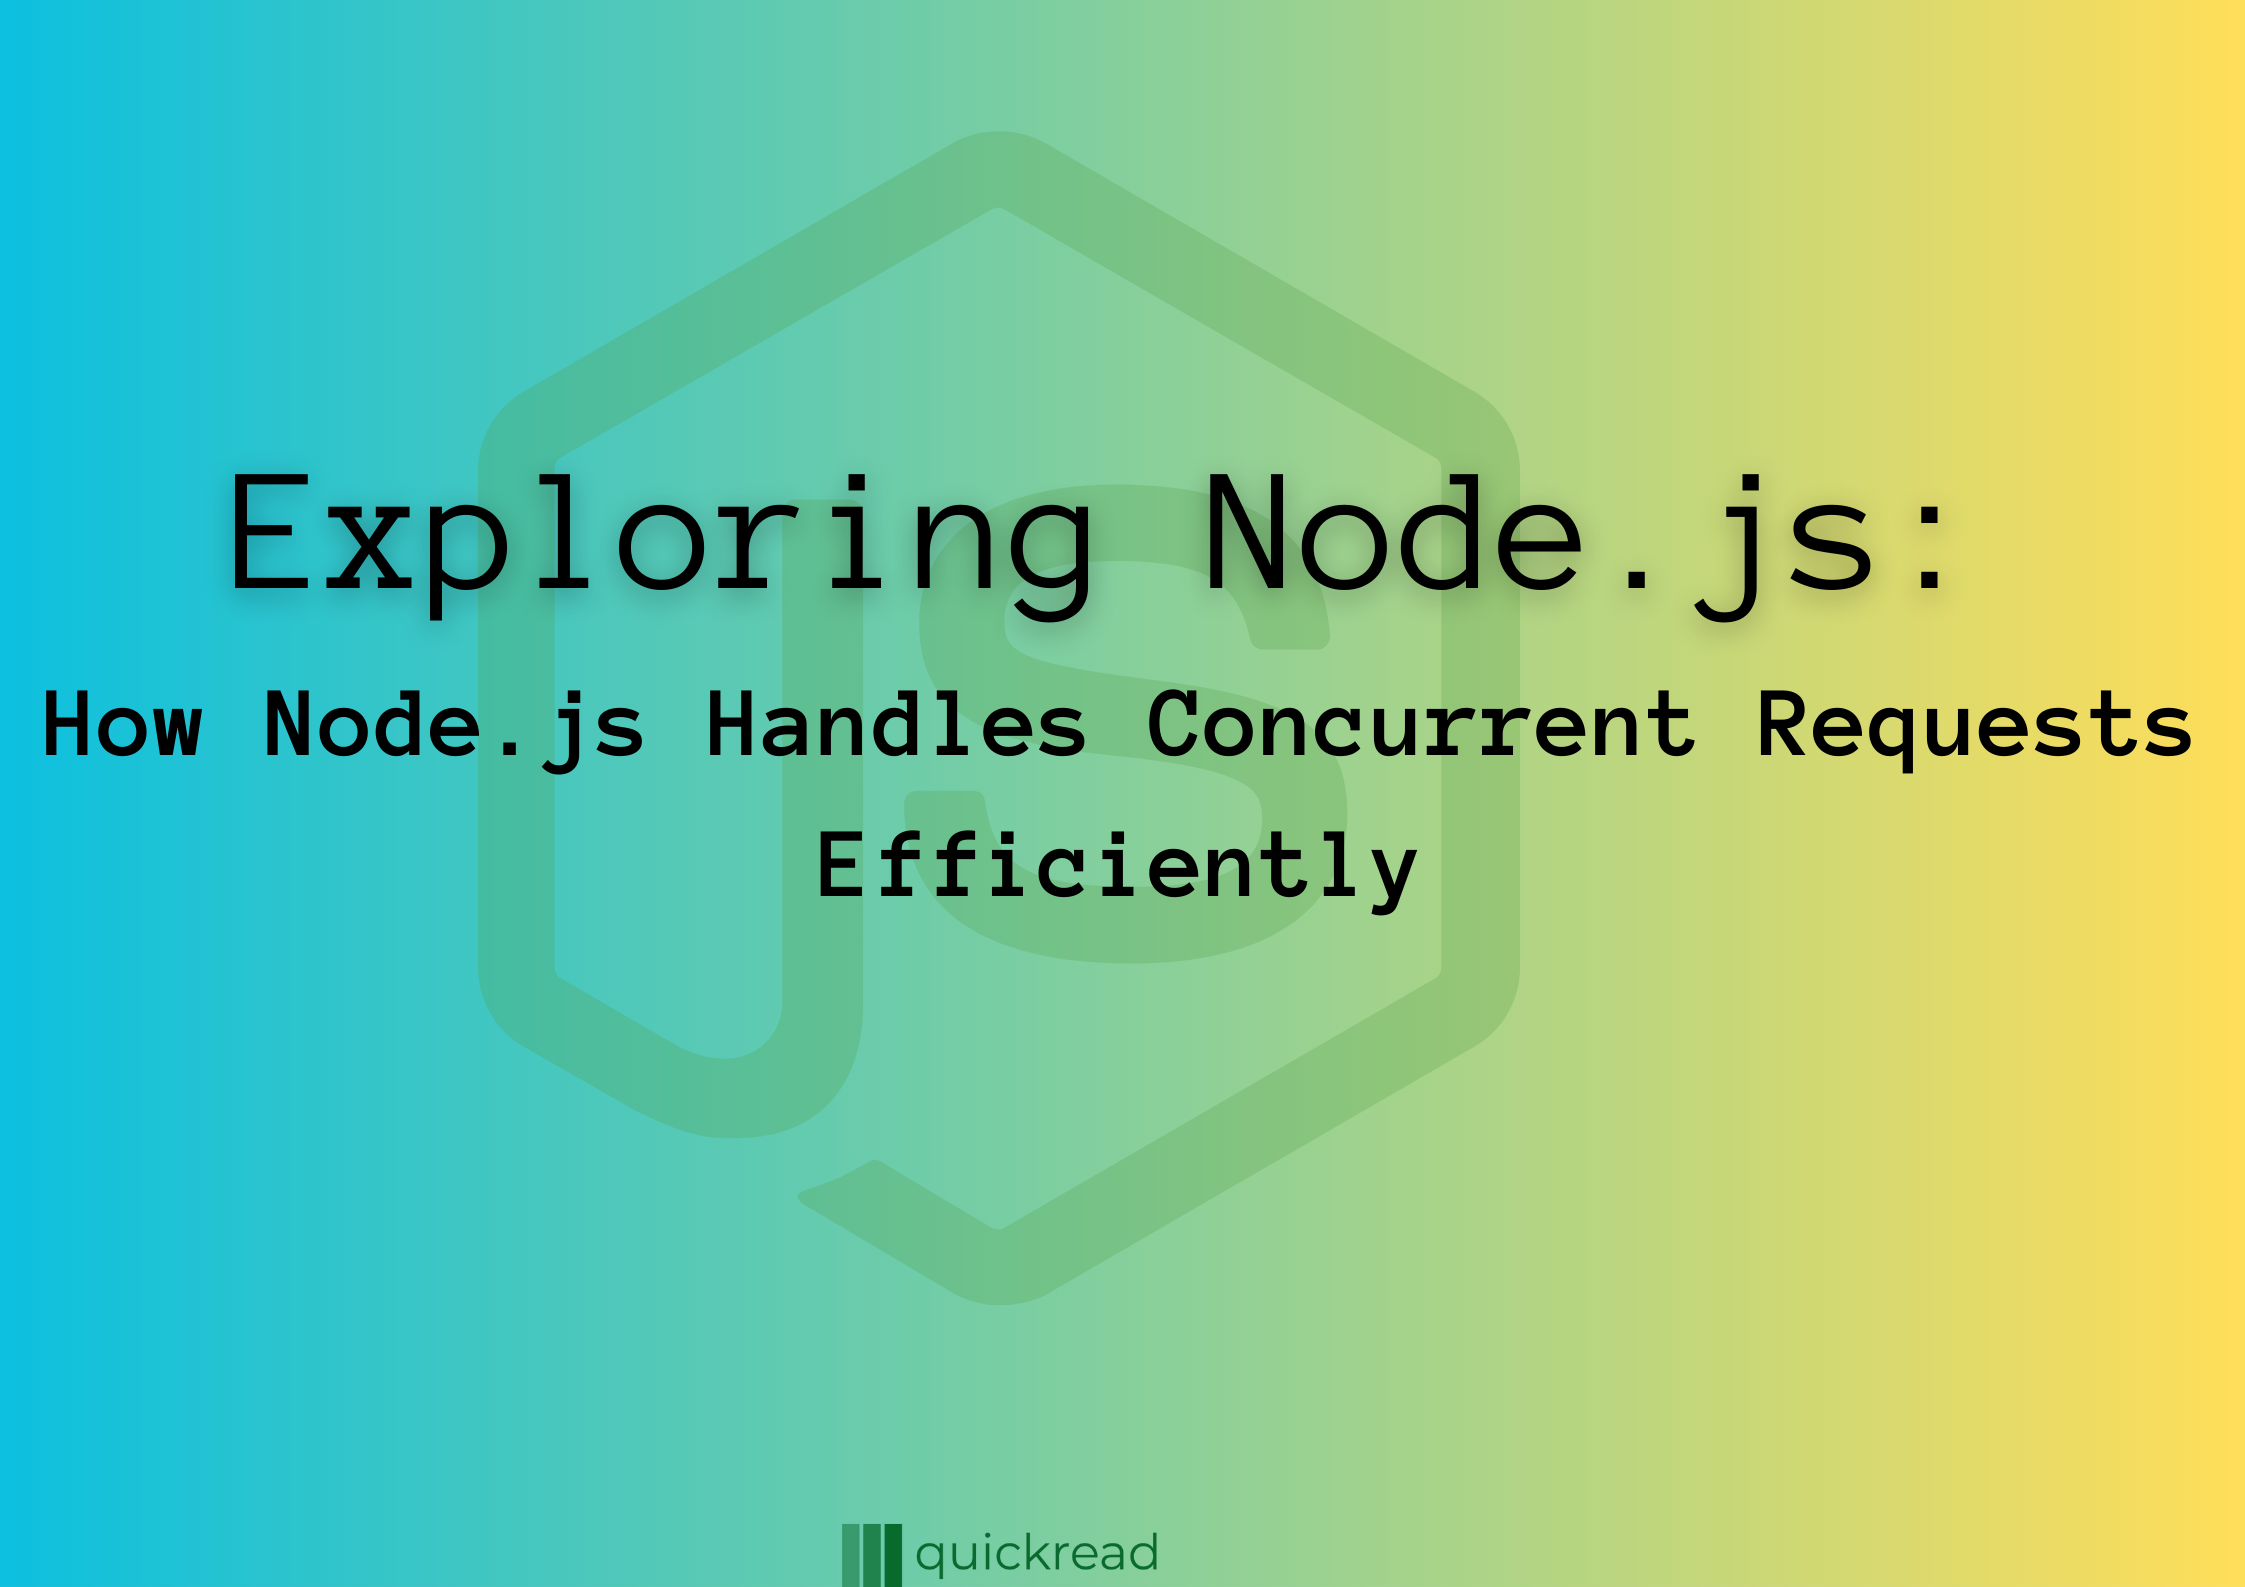 How Node.js Handles Concurrent Requests Efficiently